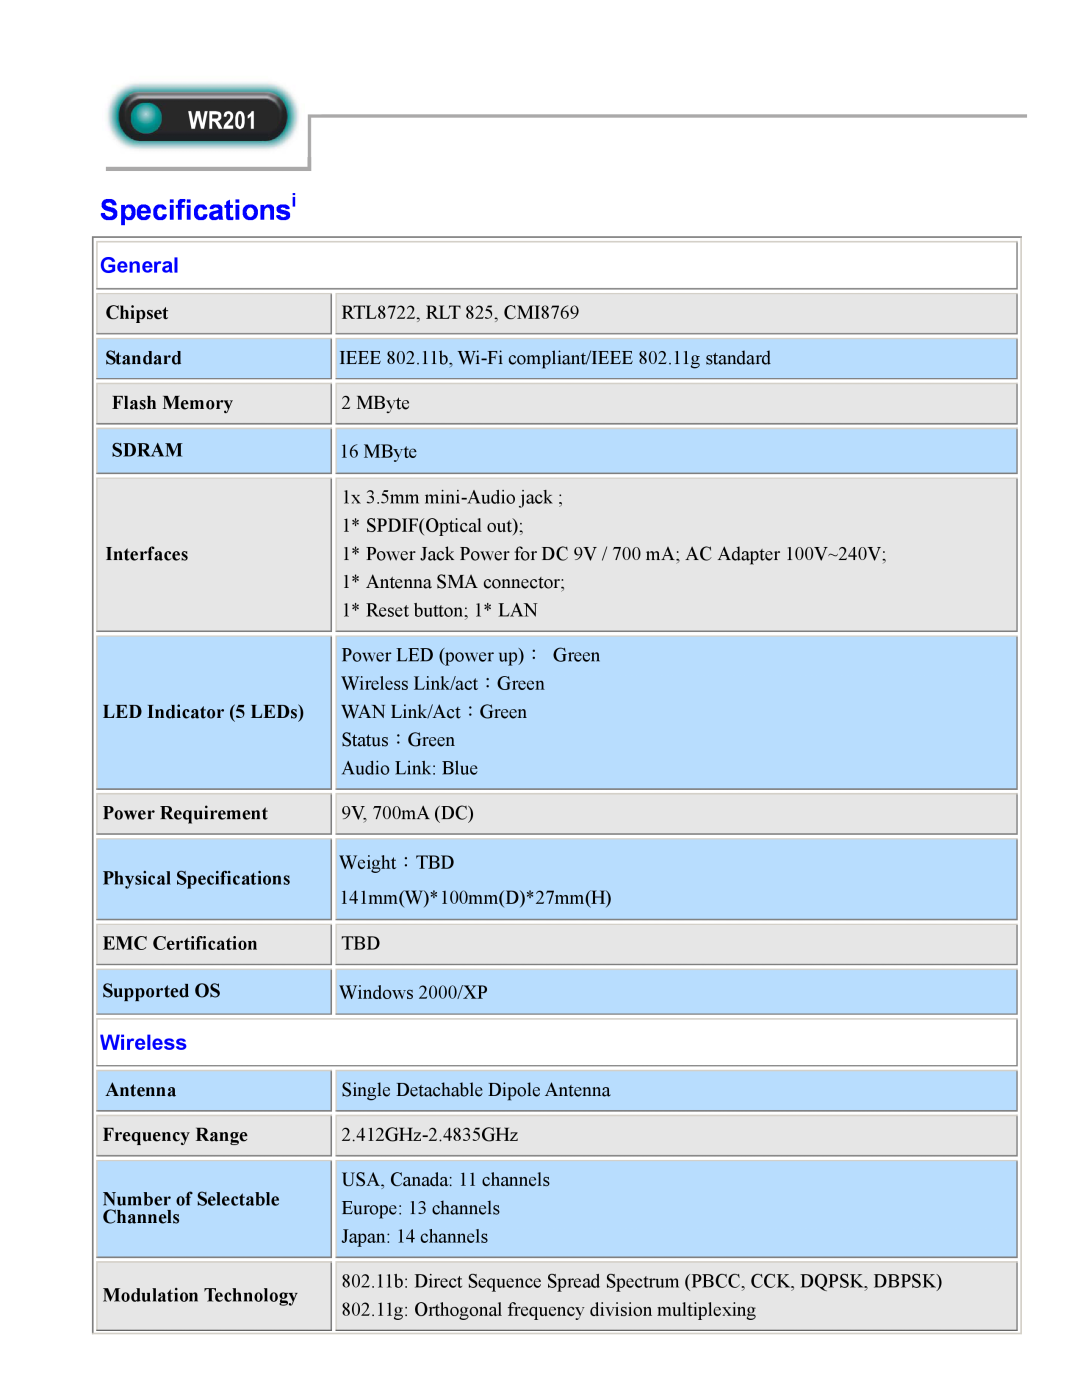 Abocom WR201 manual Specificationsi, General, Wireless 